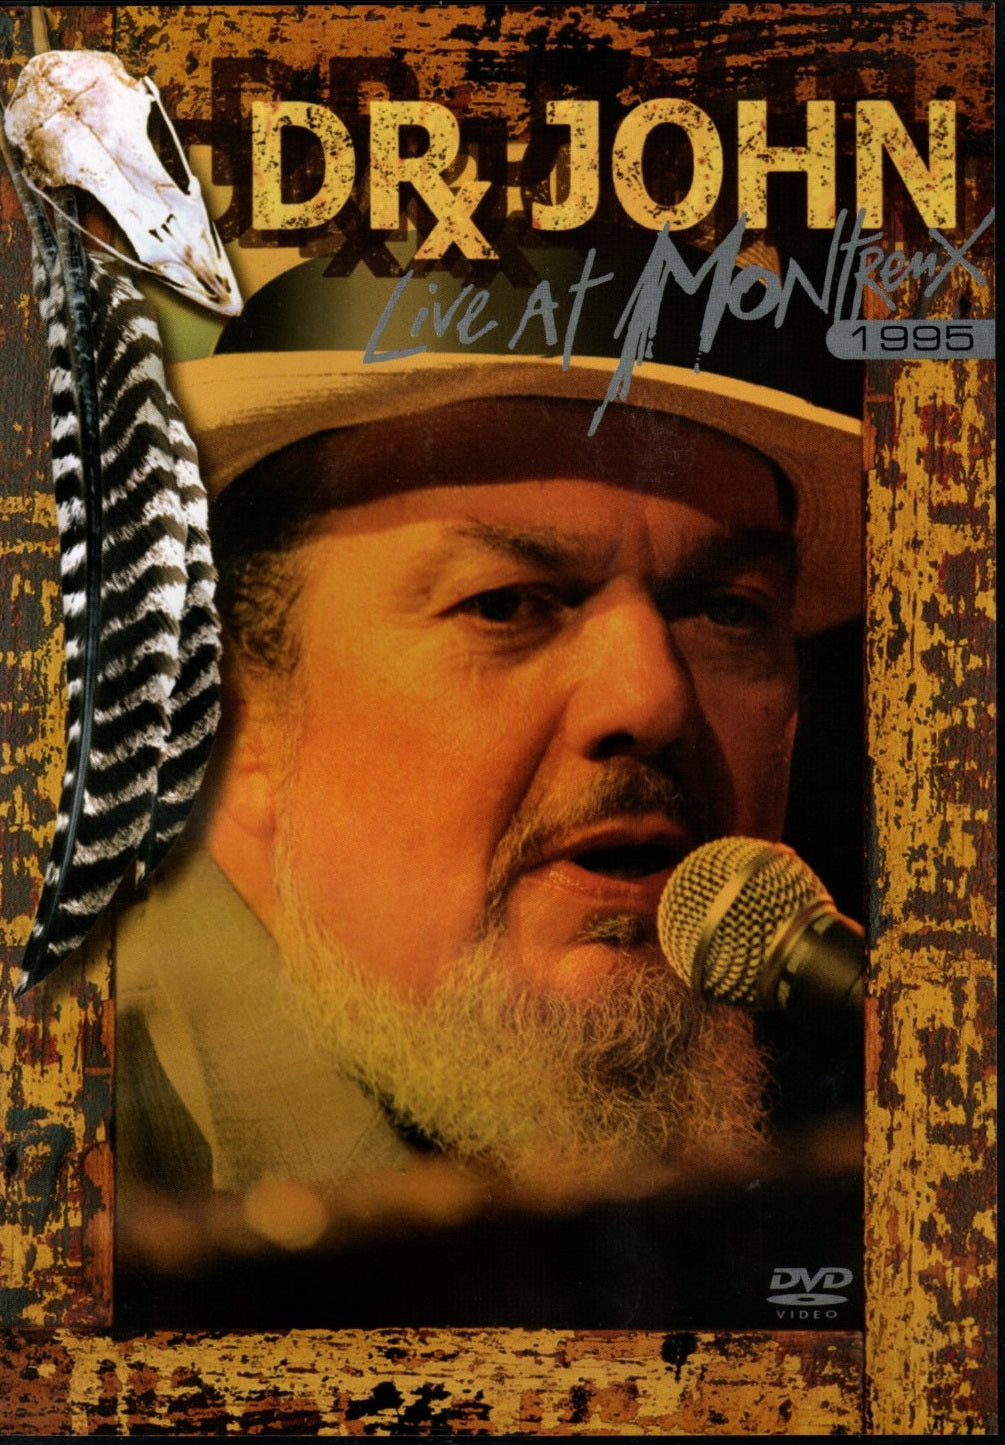 DVD DR. John - Live at Monterrey 1995